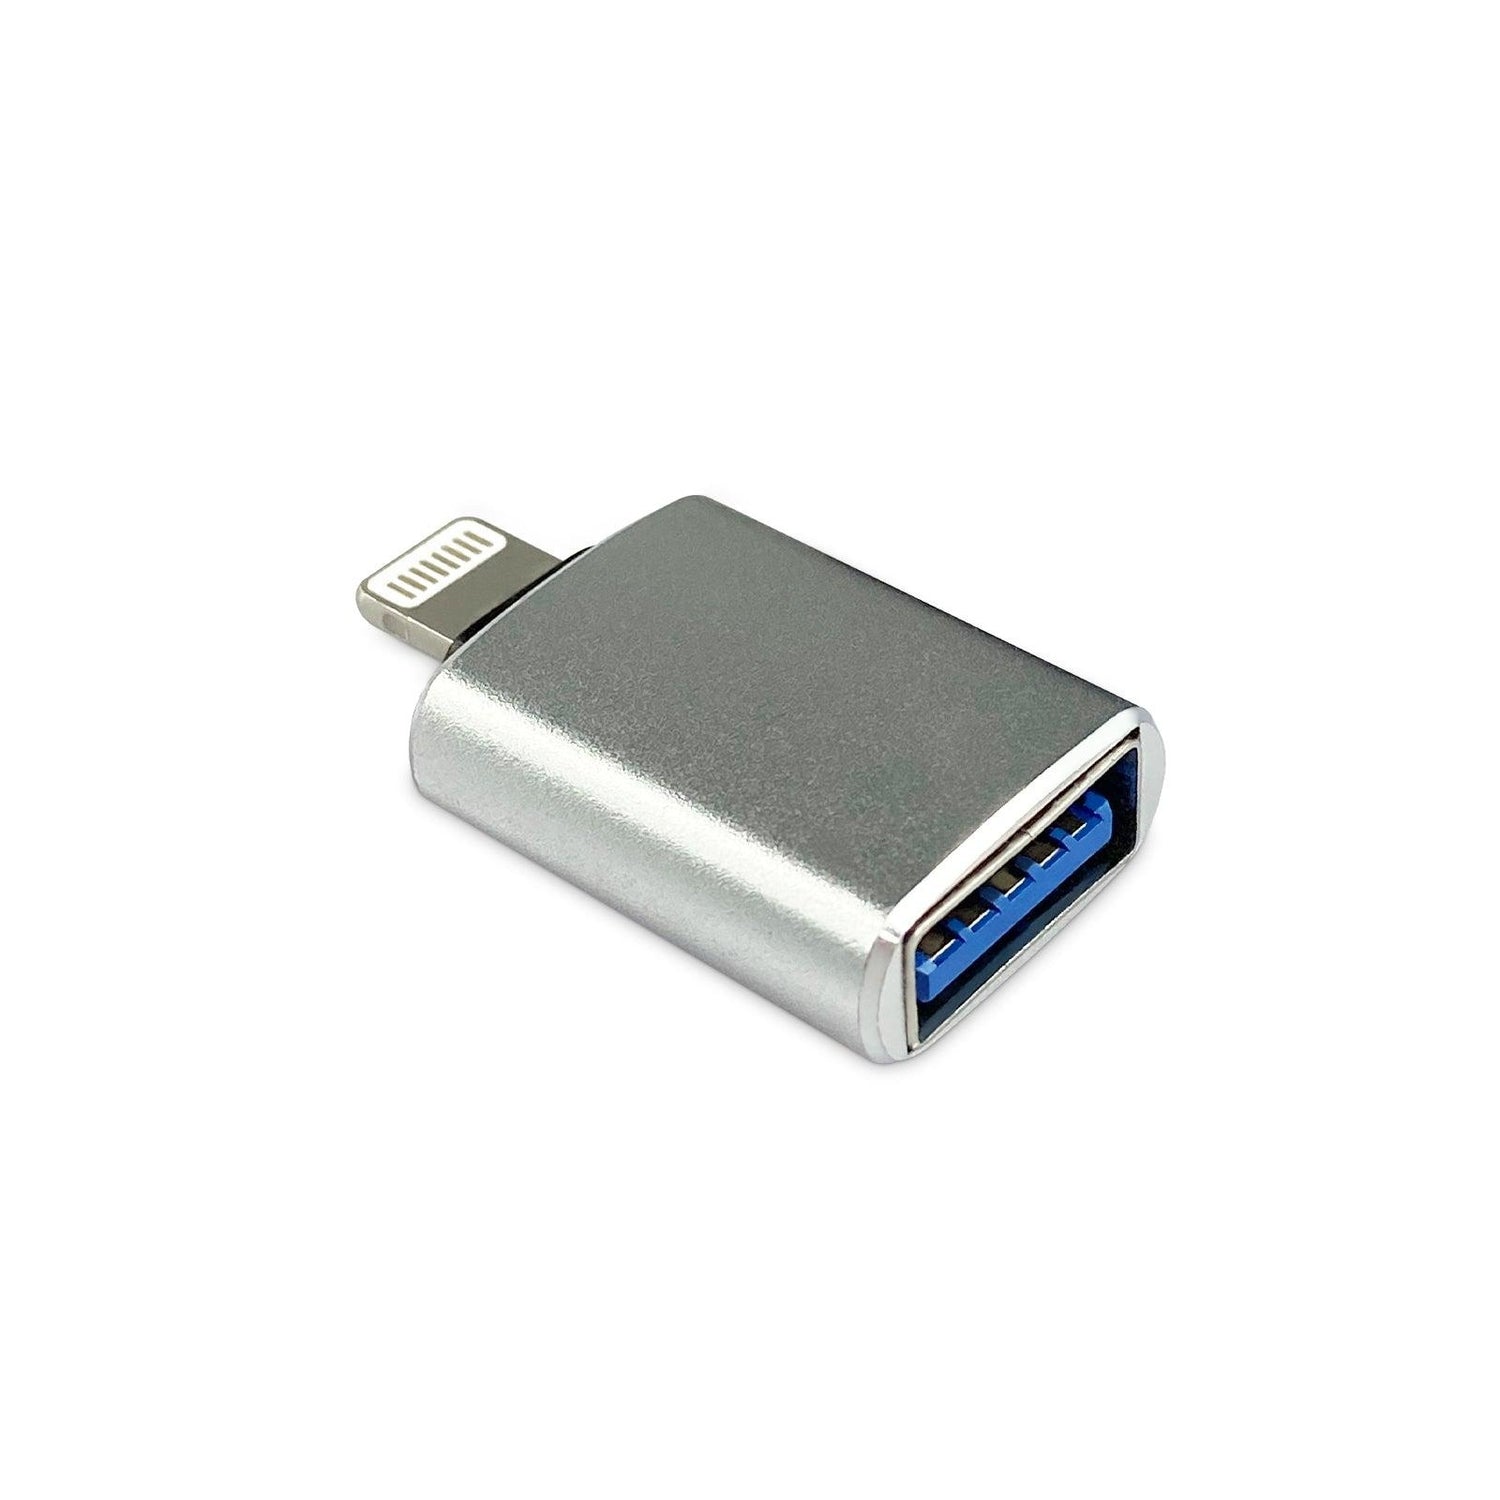 Lightning to USB Adapter